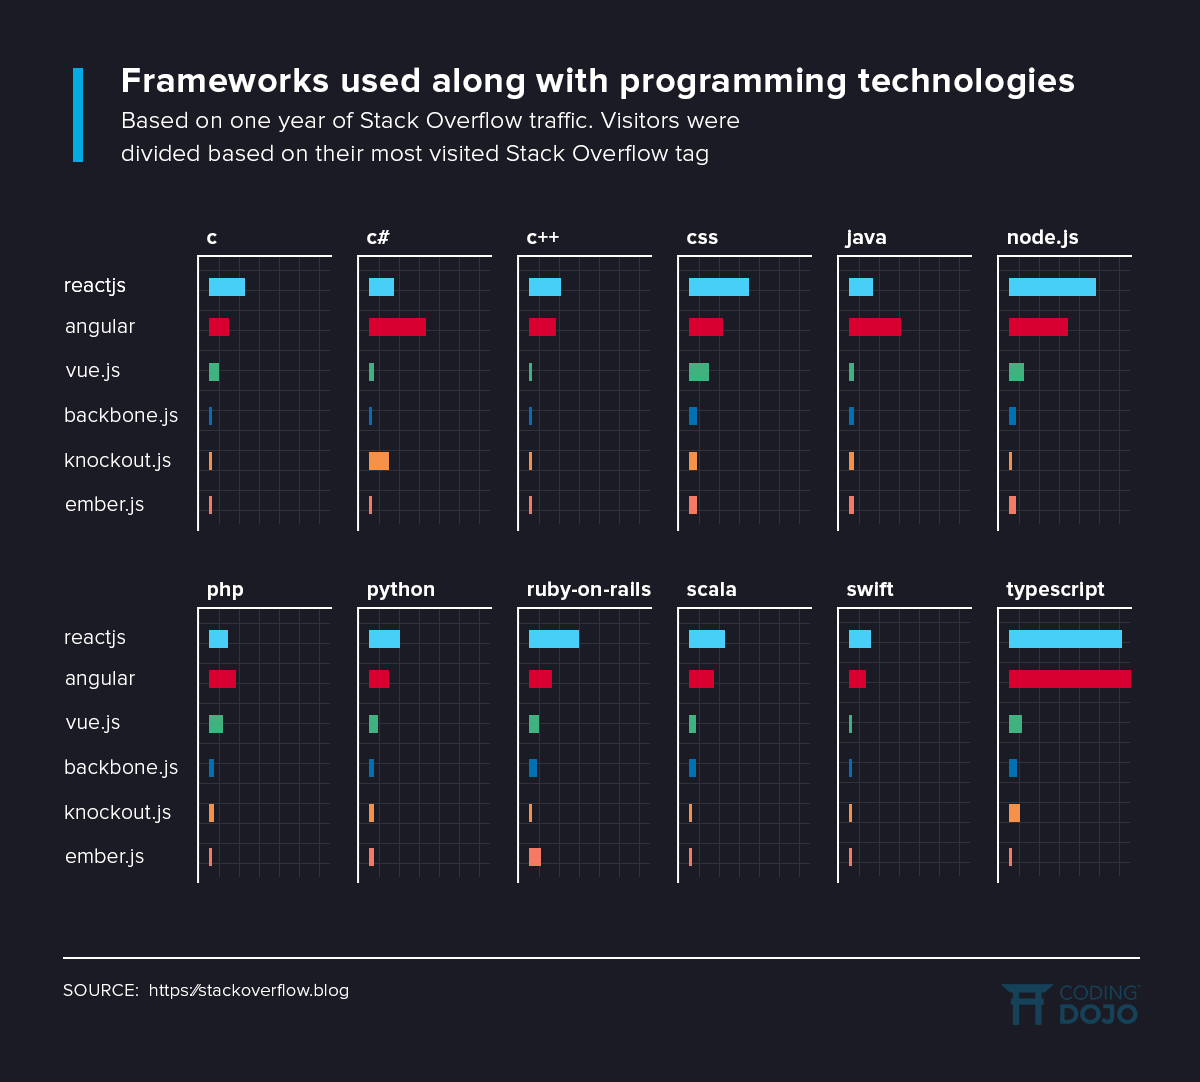 Frameworks and programming technologies